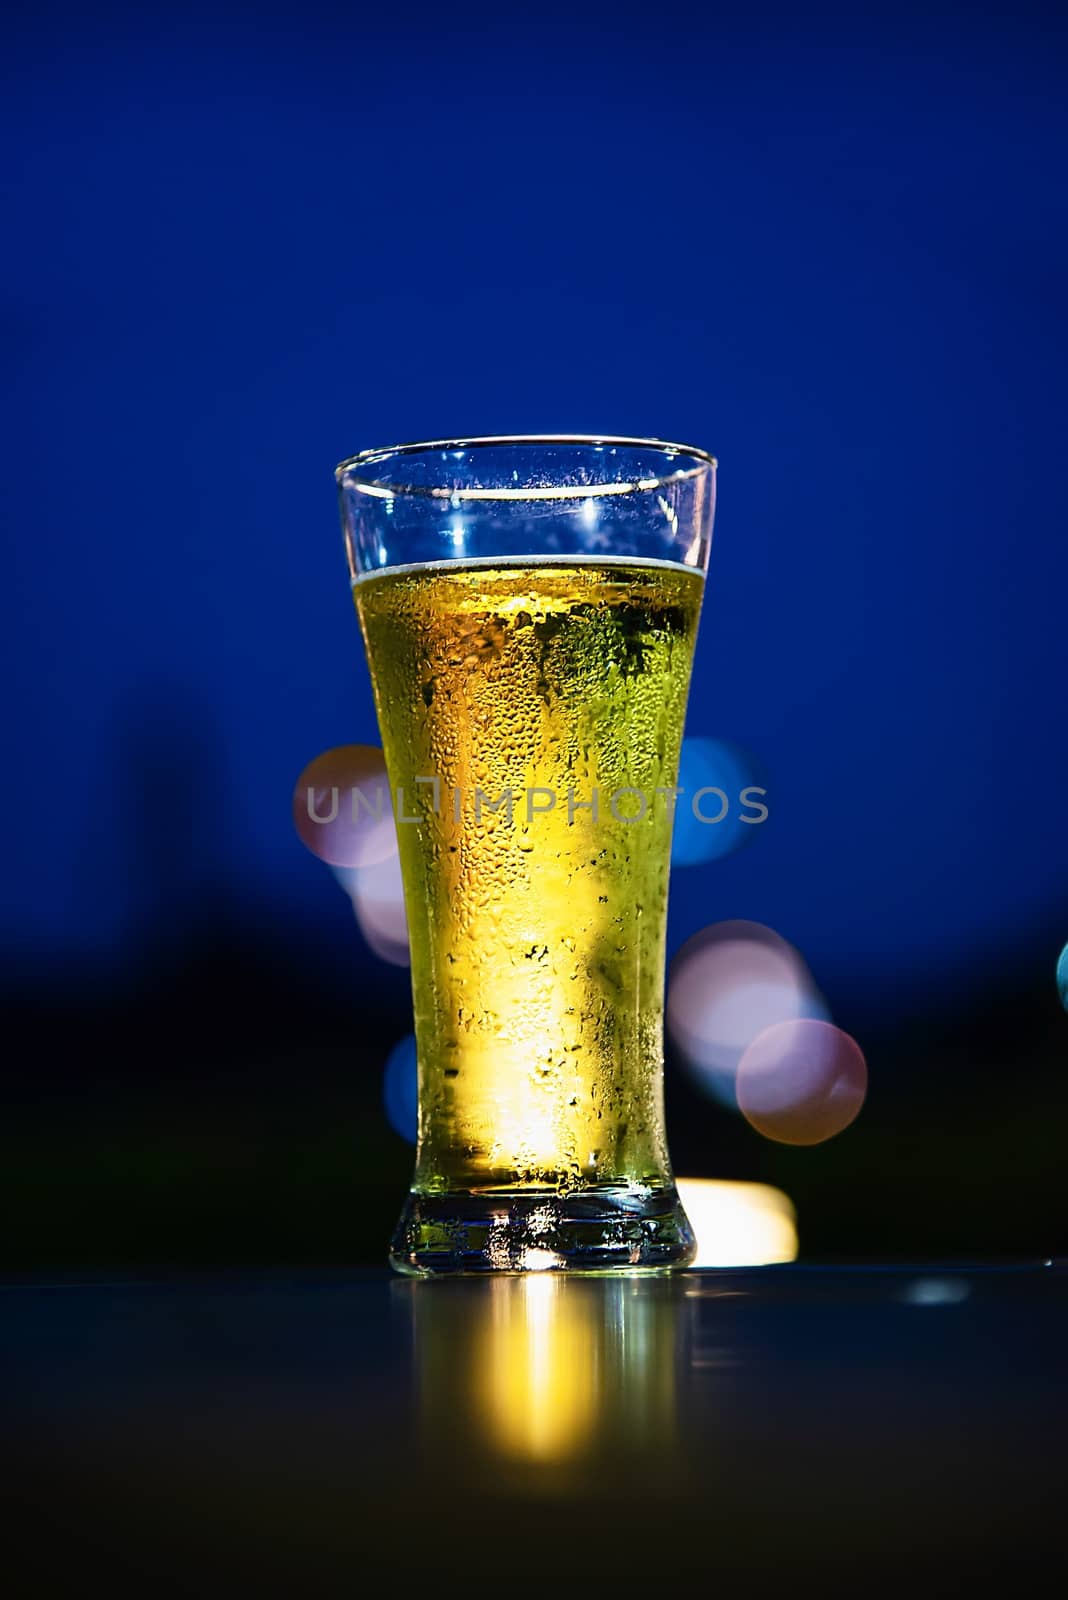 Cool beer glass in twilight - relax with beer in garden concept